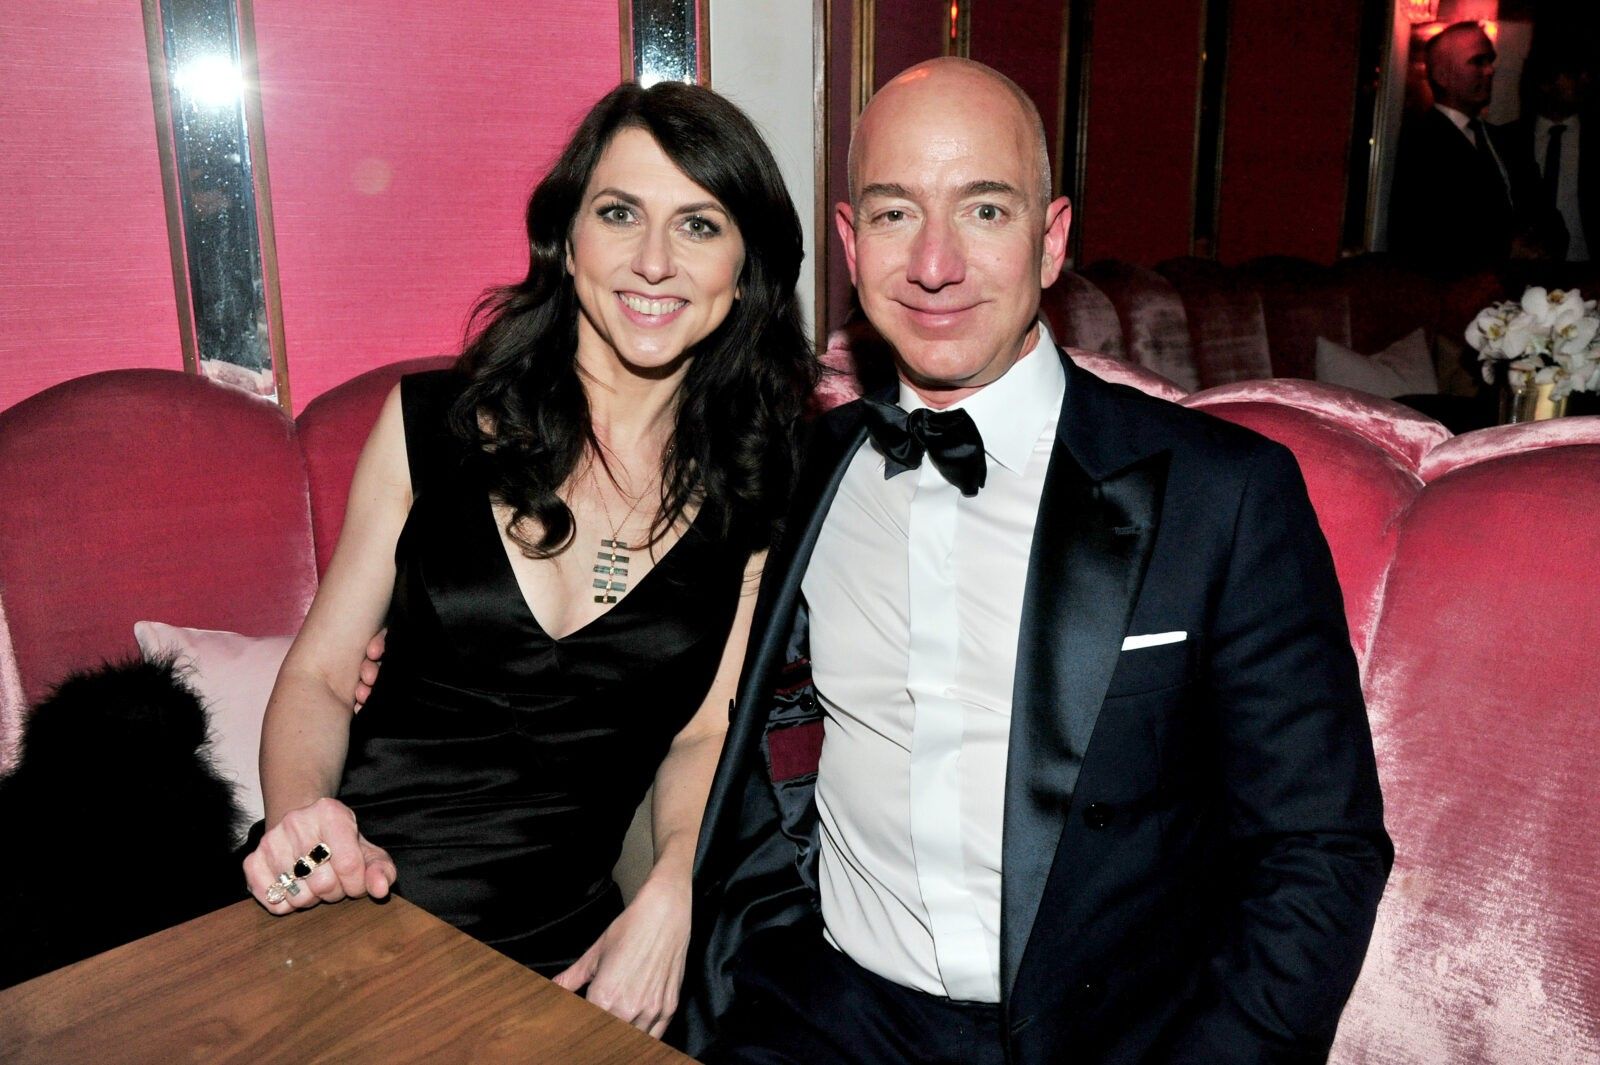 Mackenzie-and-Jeff-Bezos